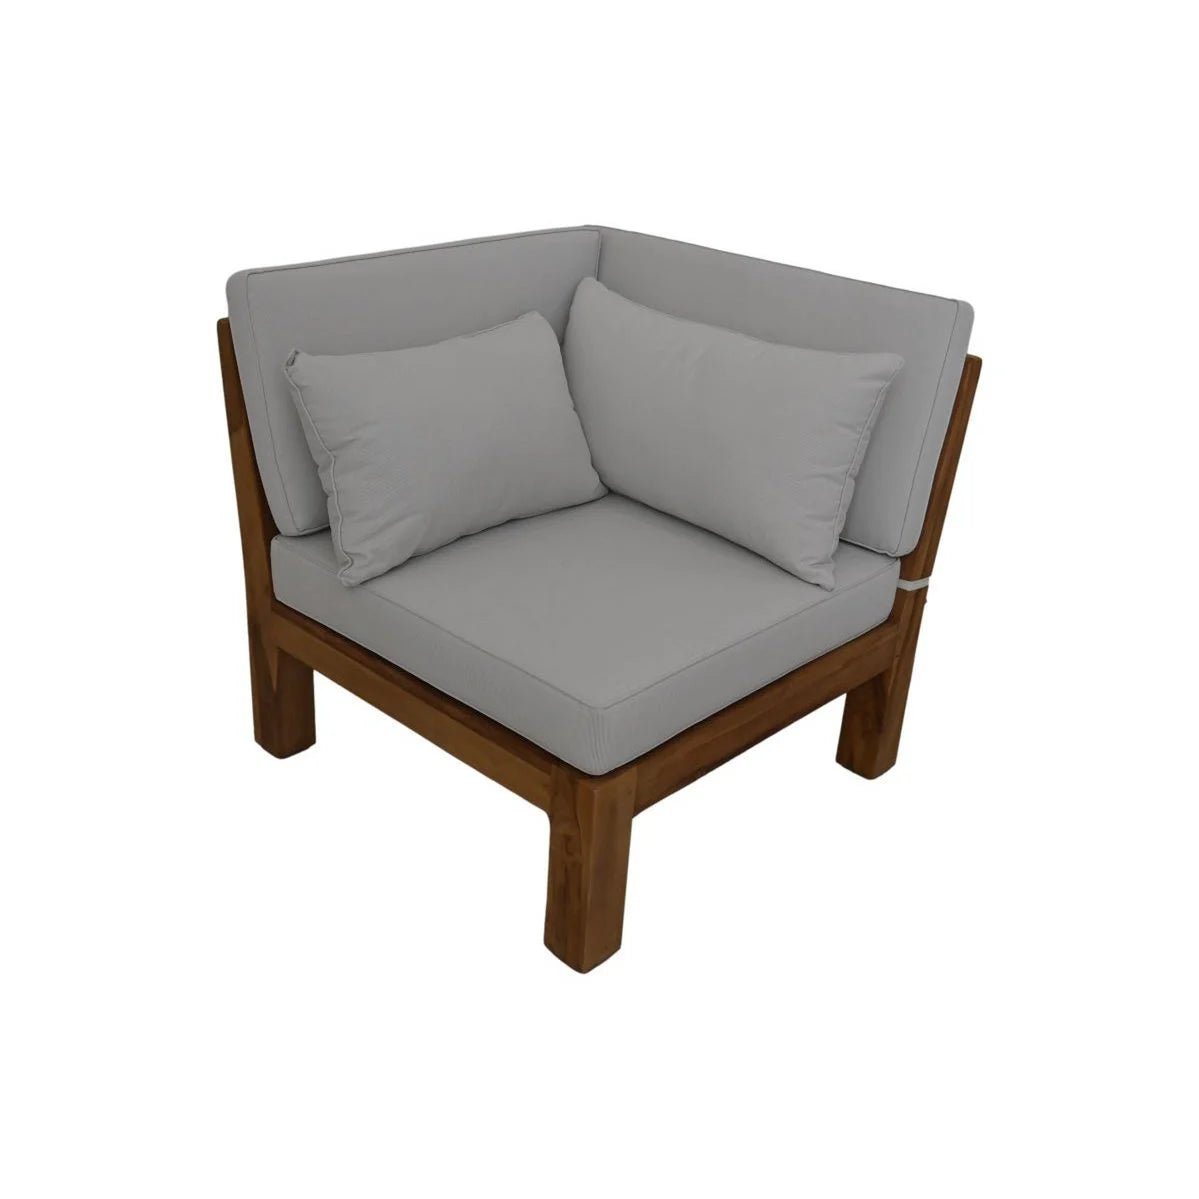 Aruba 8-delig garden lounge + Coffee table (cushions included) - White - Teak